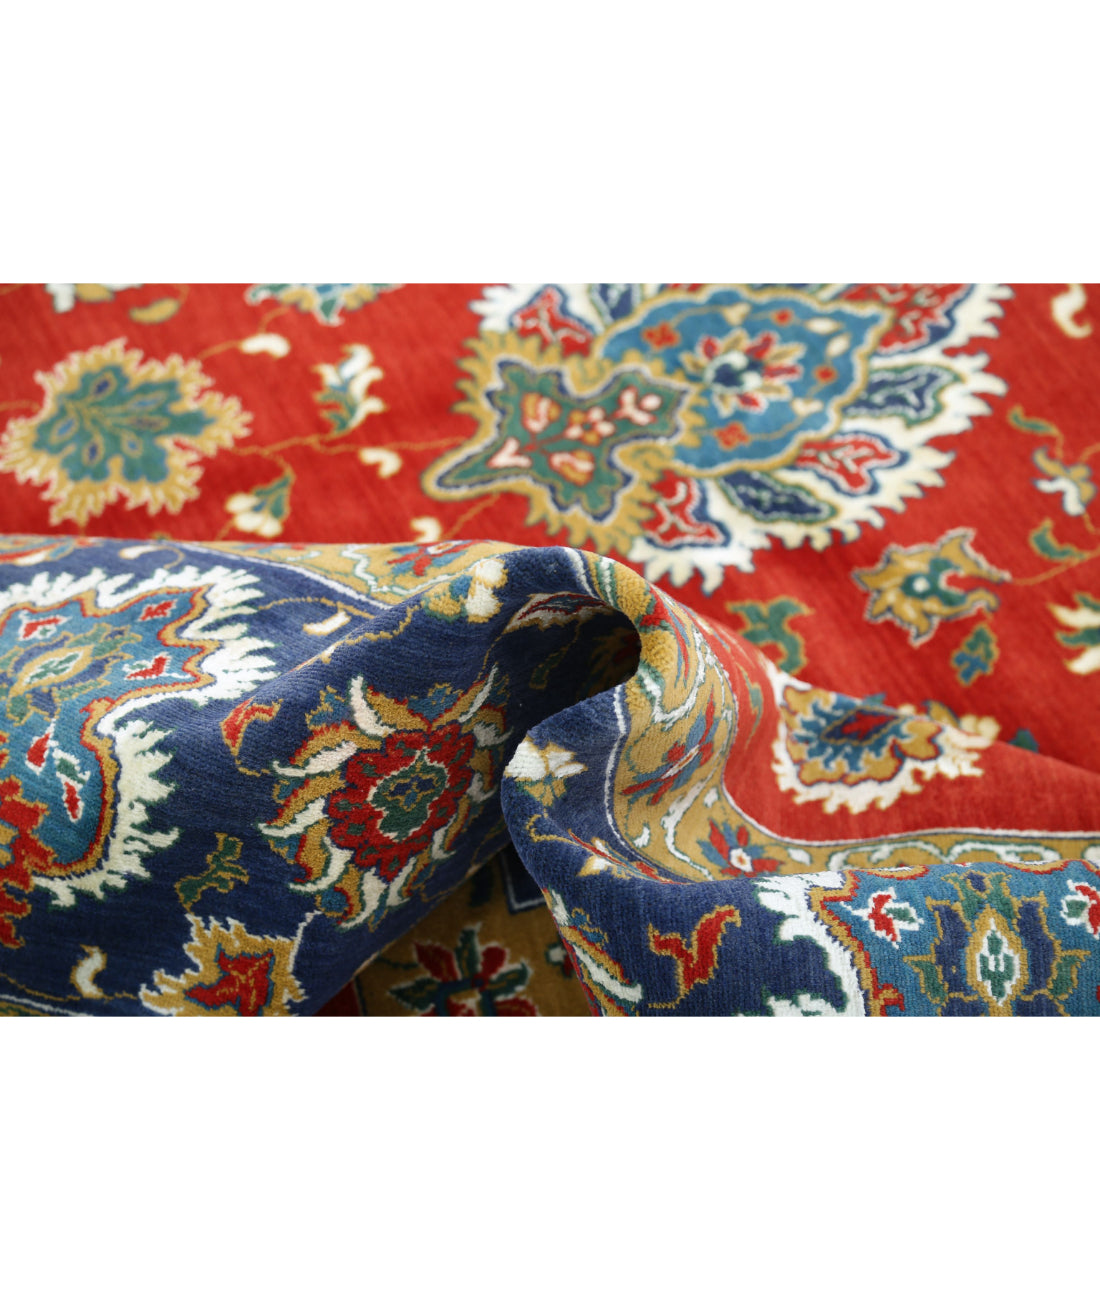 Gulshan Wool & Bamboo Silk Rug - 8'10'' x 12'3'' 8'10'' x 12'3'' (265 X 368) / Red / Blue